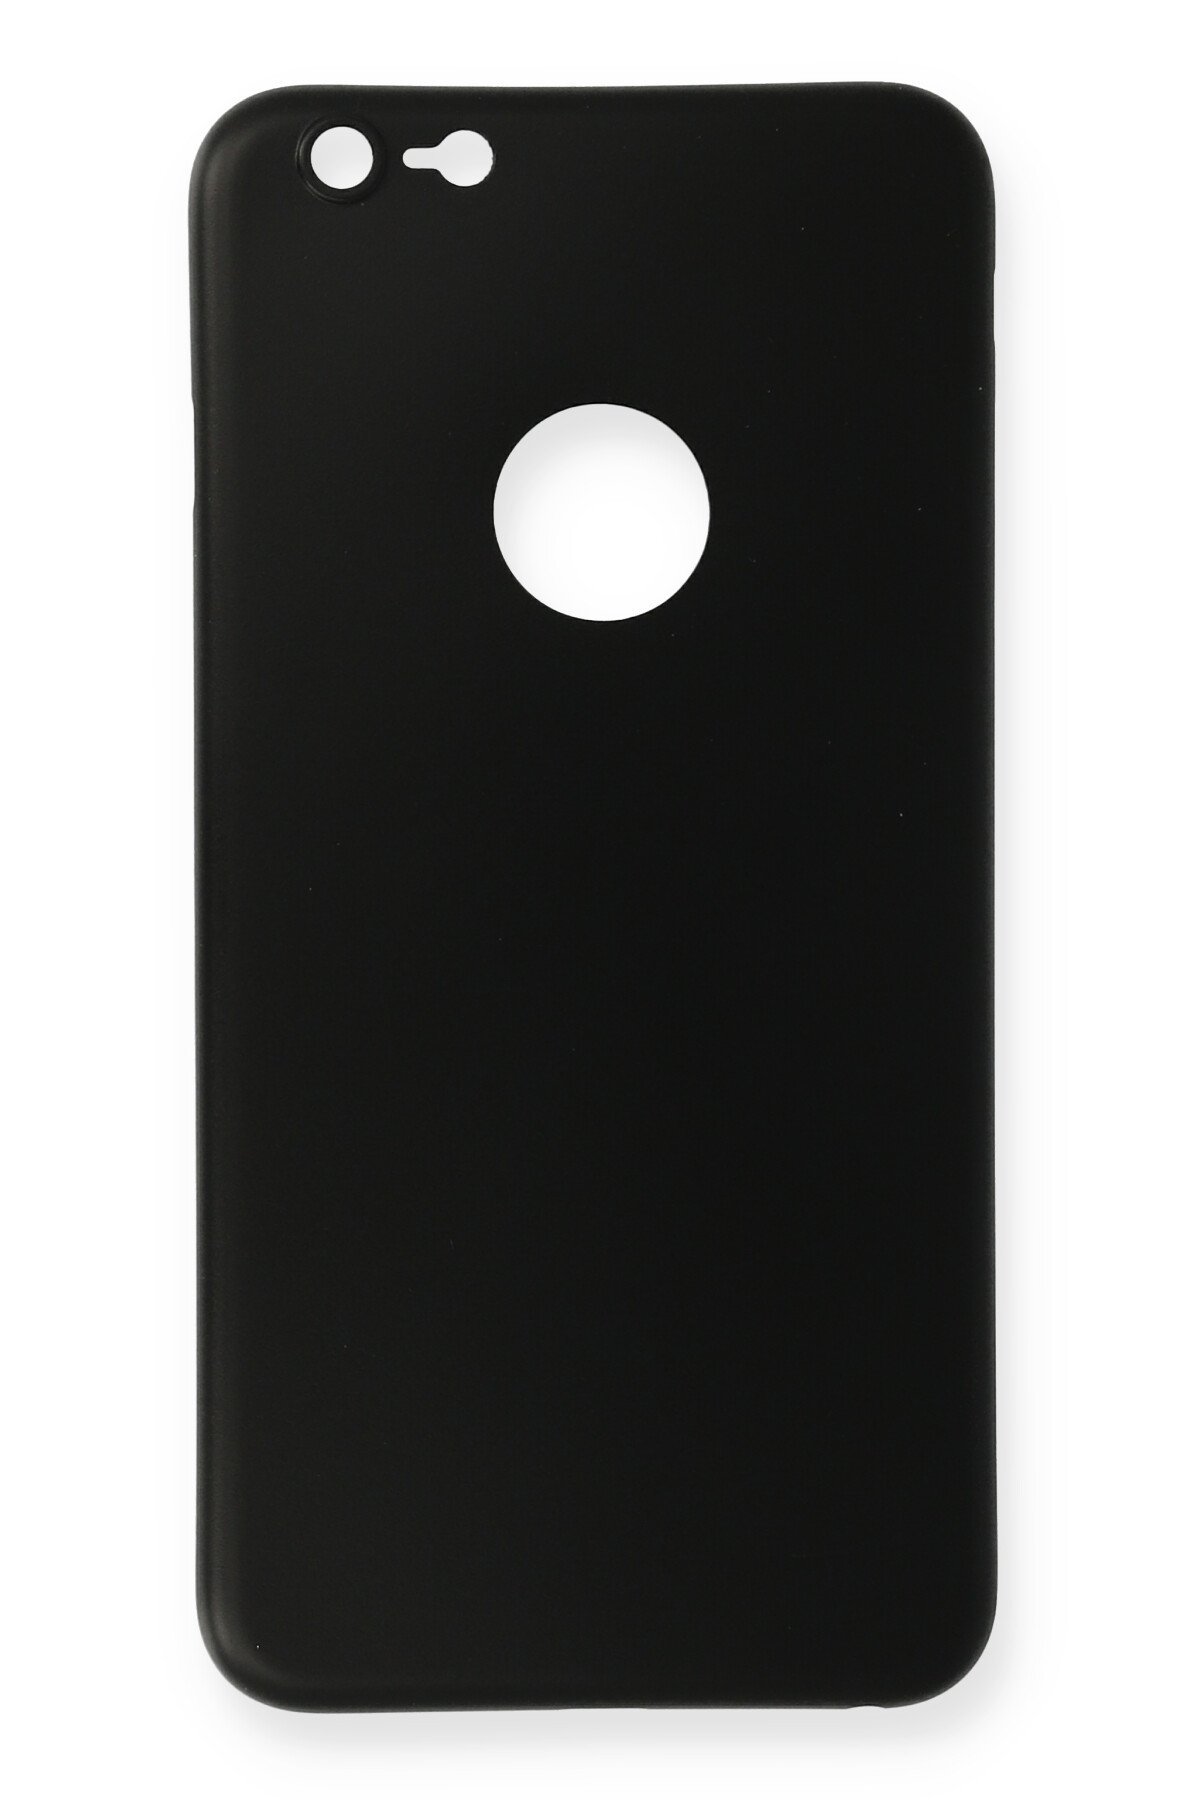 NewFace Newface iPhone 6 Plus Kılıf PP Ultra İnce Kapak - Siyah